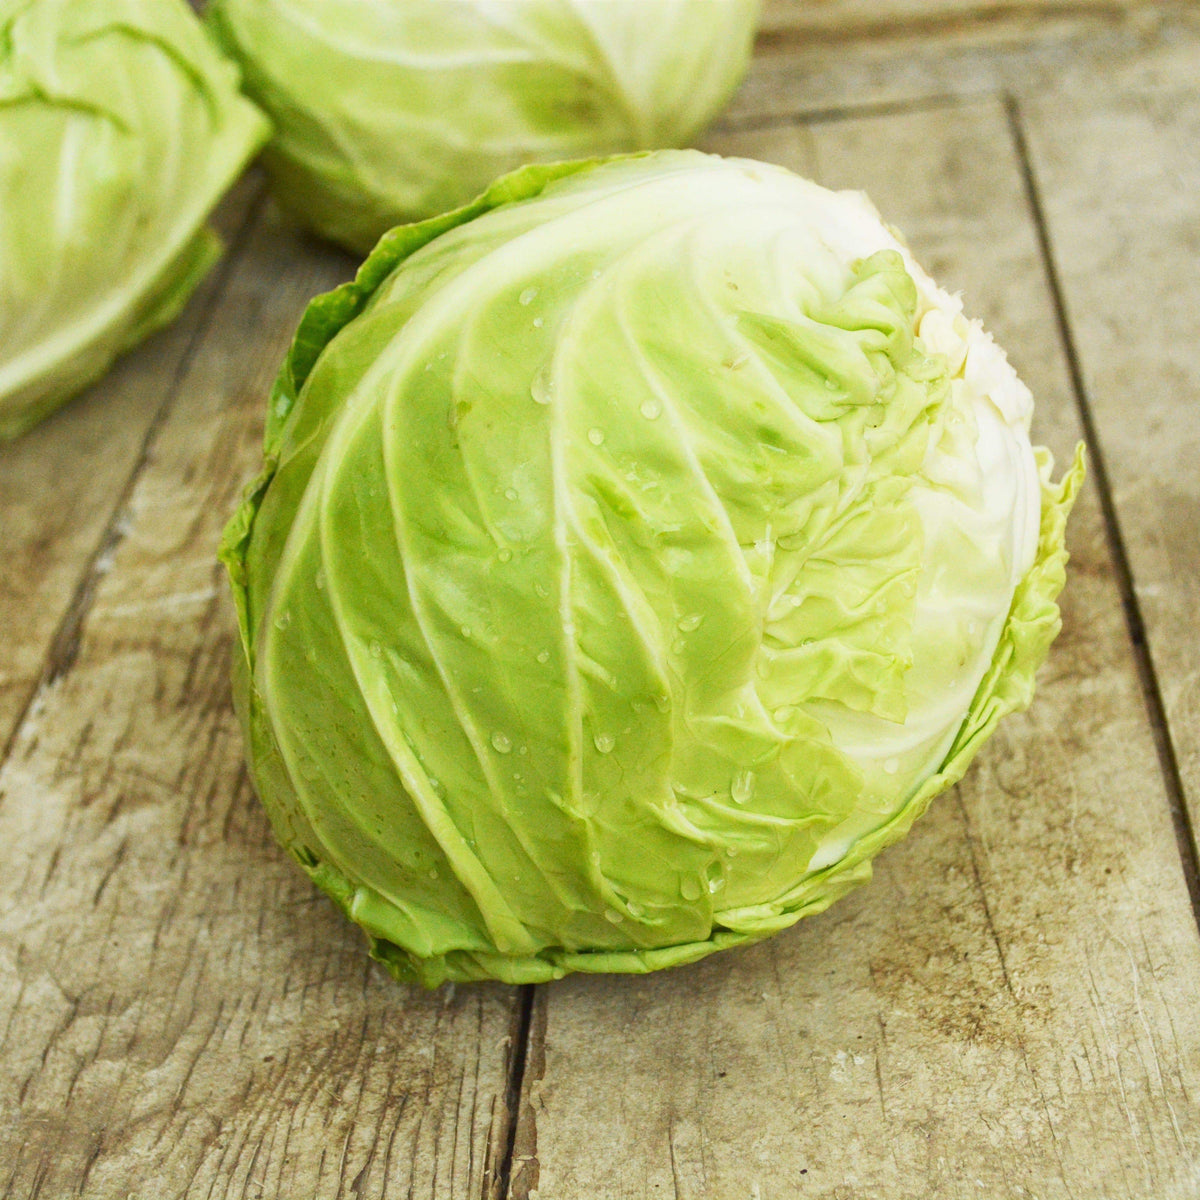 Copenhagen Market Cabbage